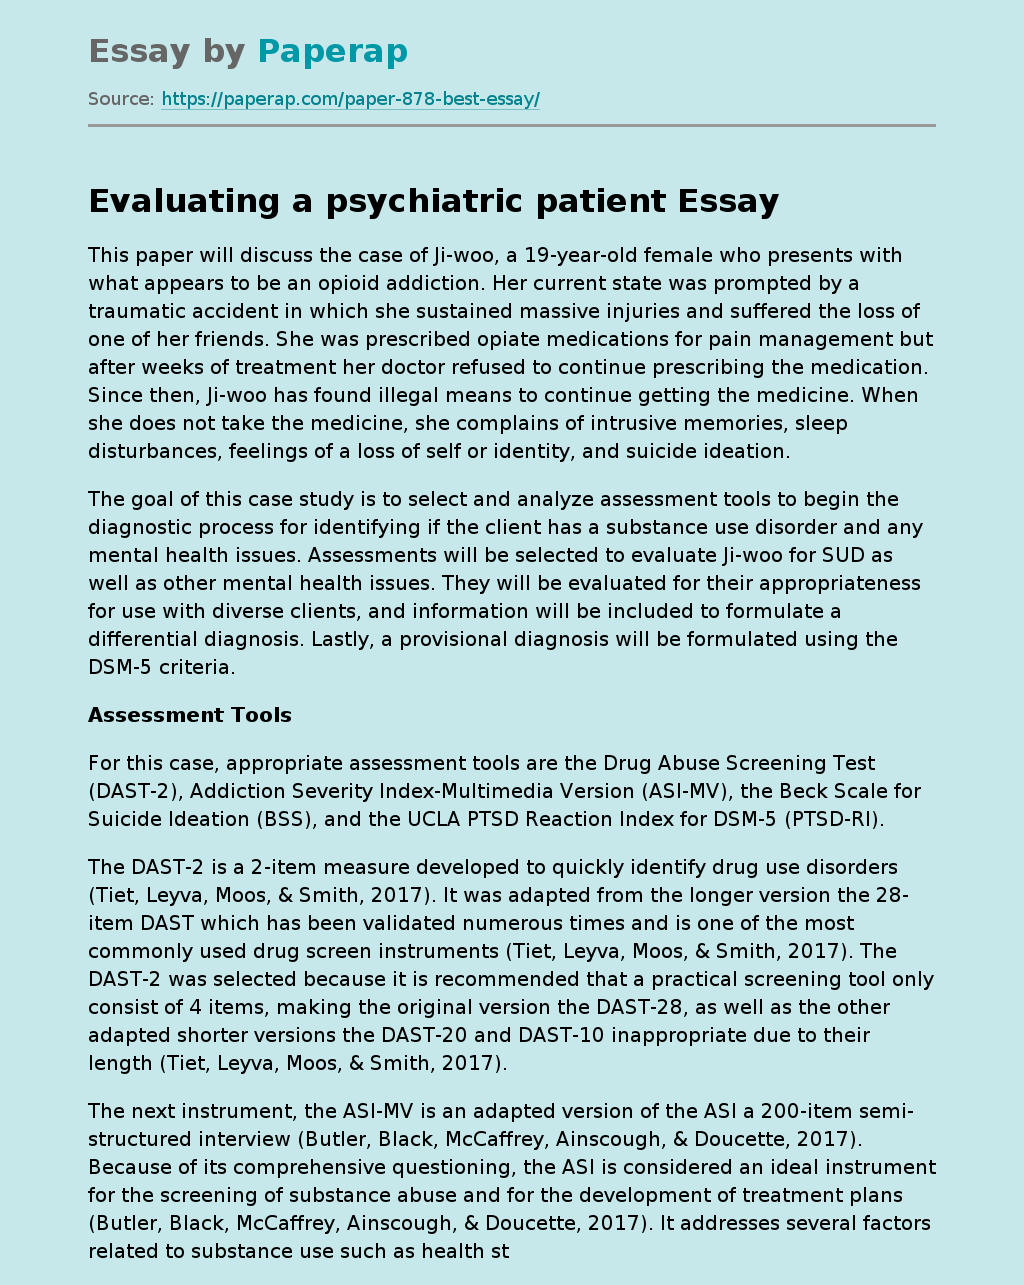 Evaluating a Psychiatric Patient